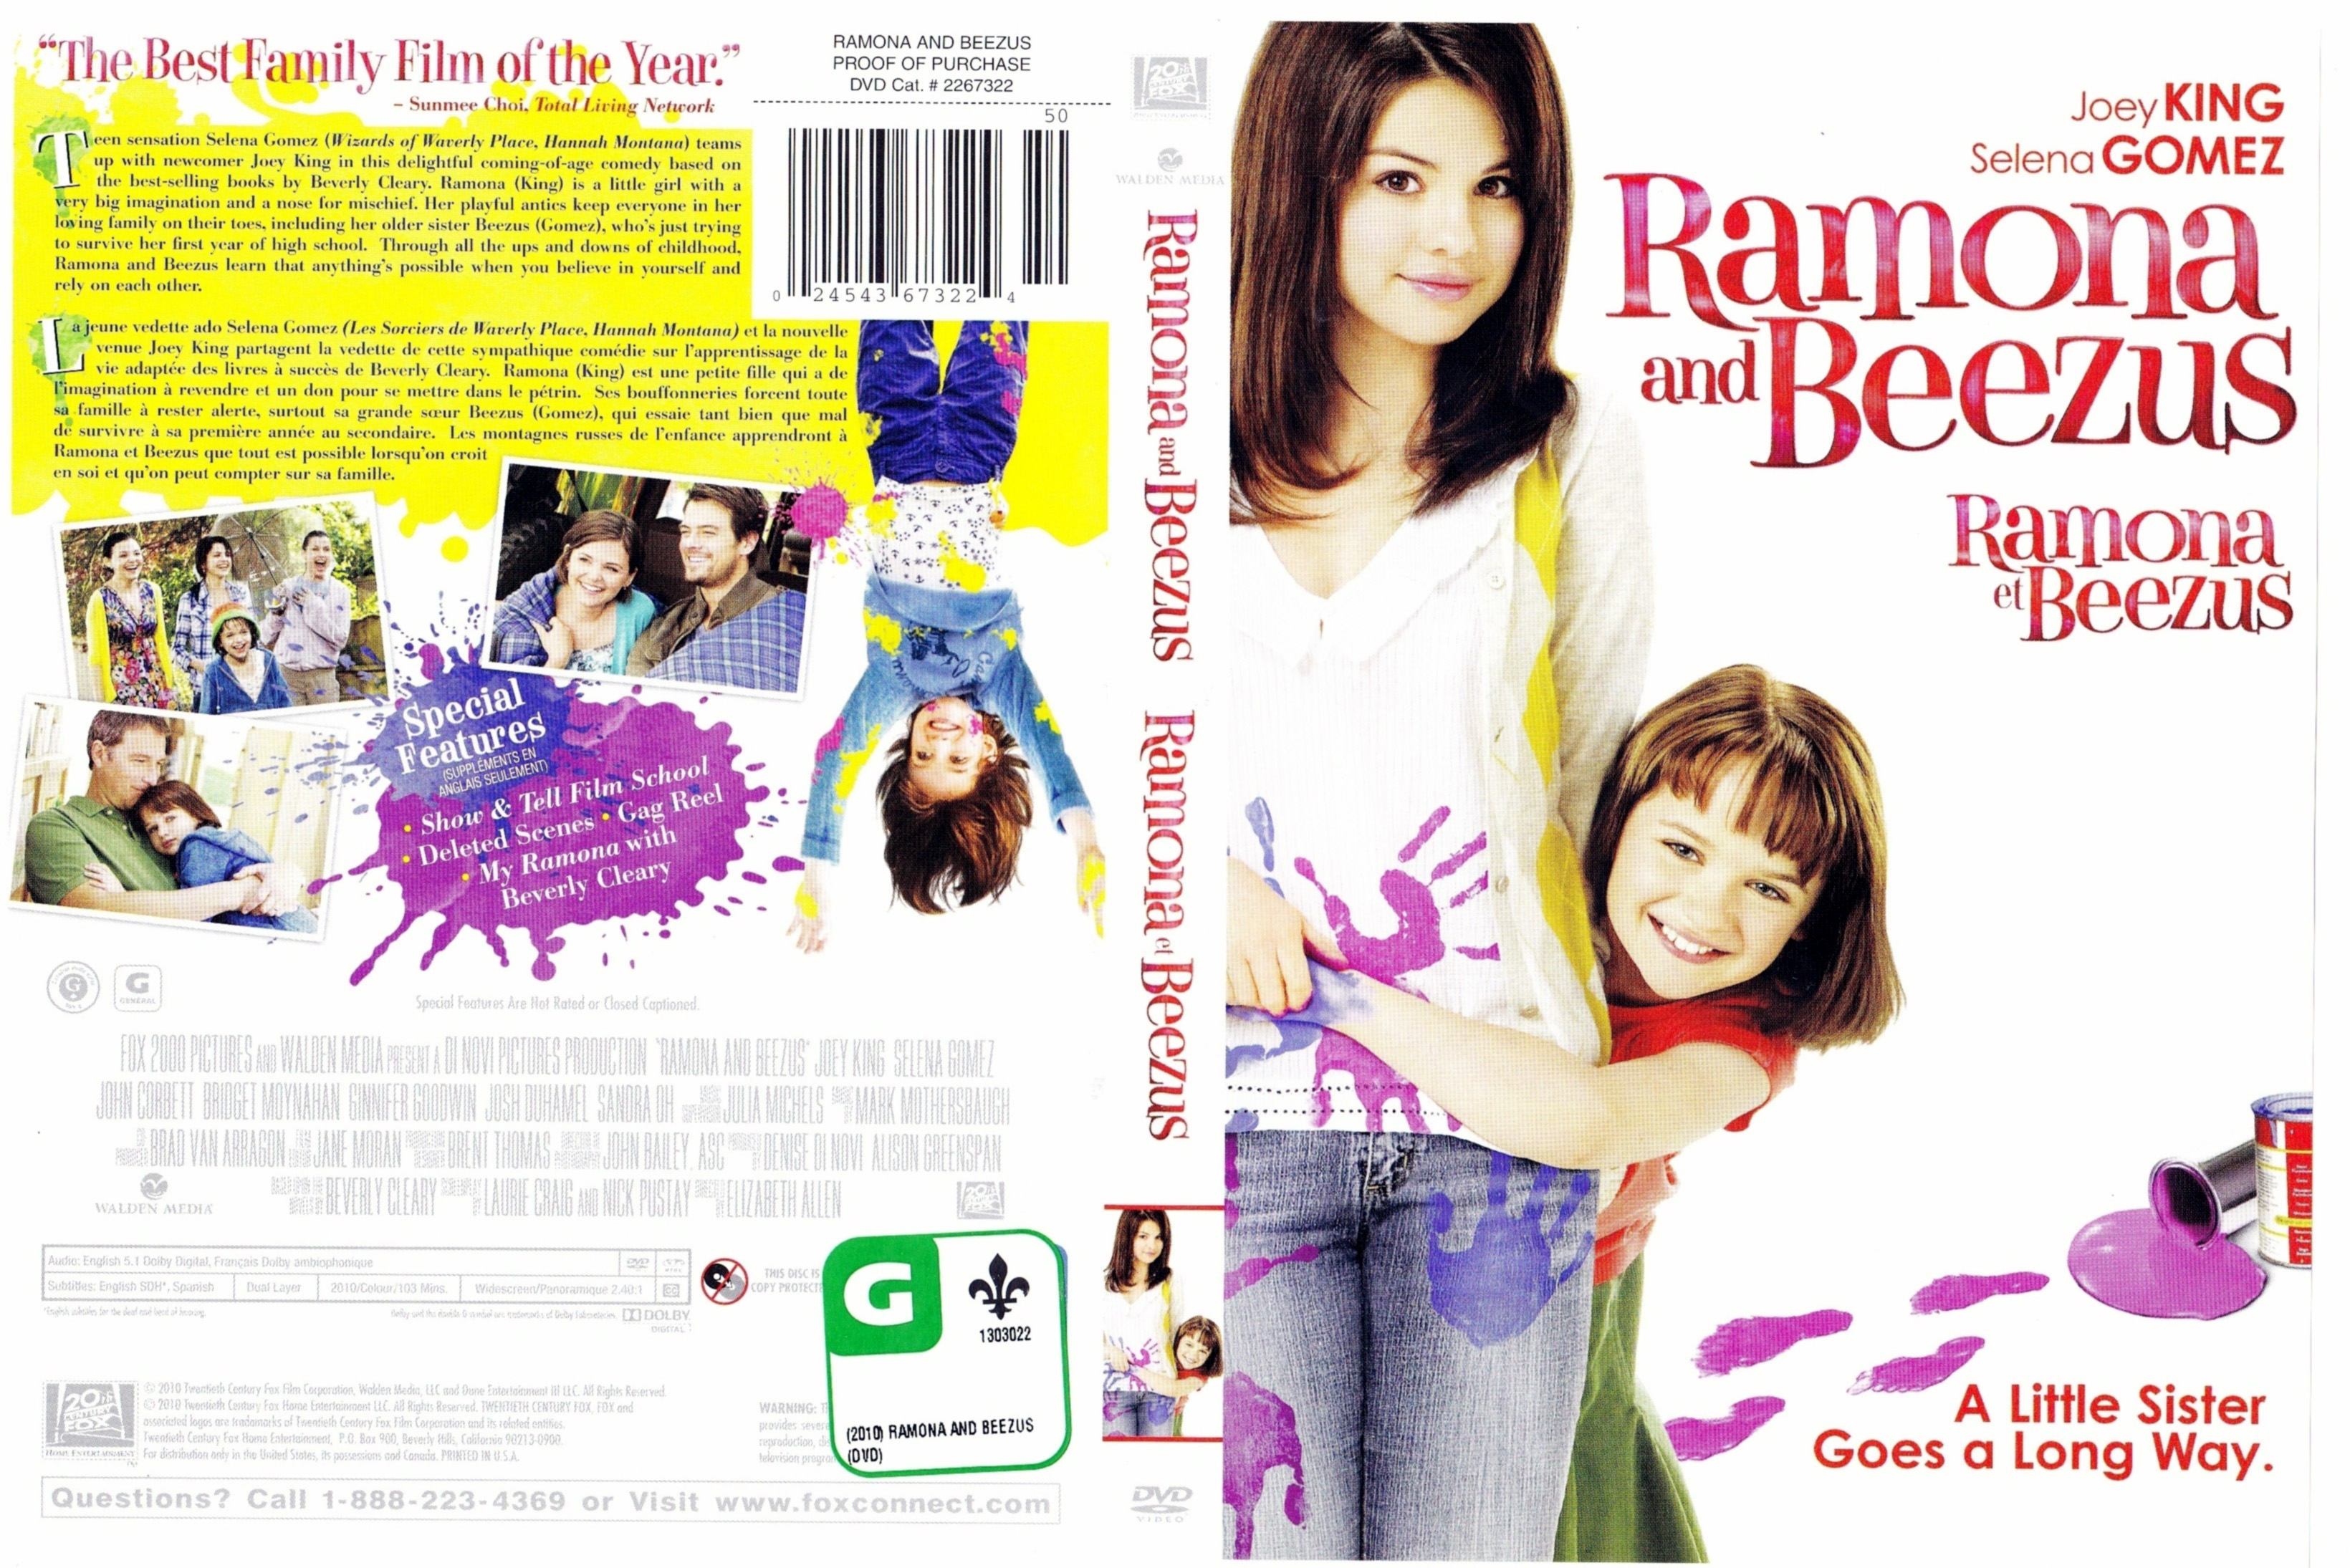 Jaquette DVD Ramona et Beezus (Canadienne)